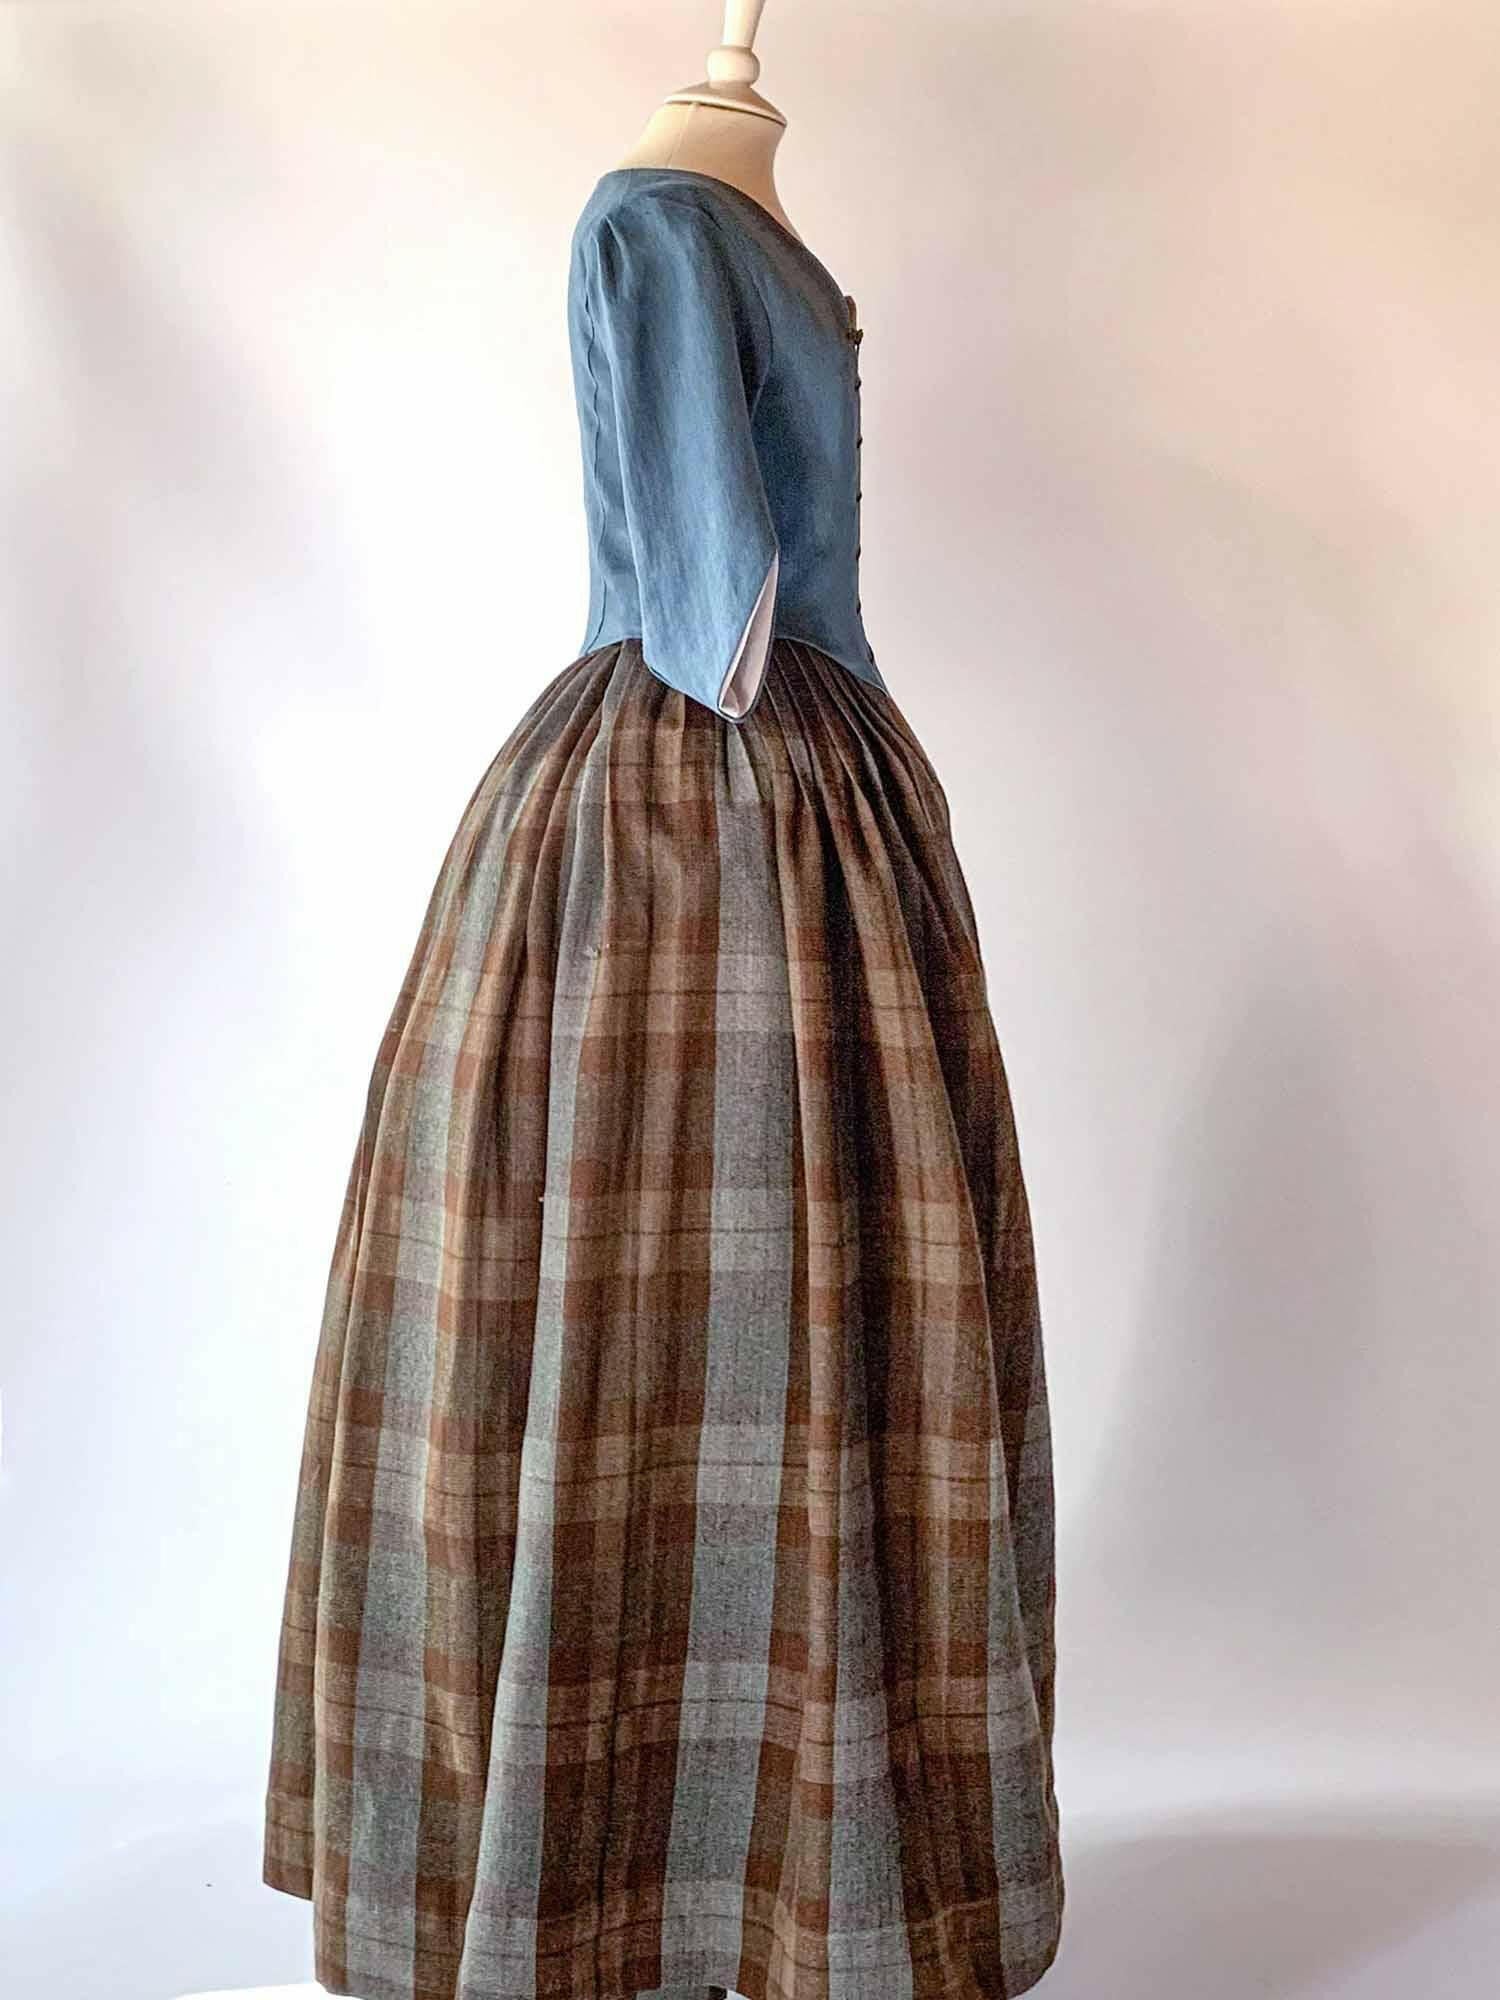 Outlander Costume in Steel Blue Linen and Outlander Tartan Skirt - Atelier Serraspina